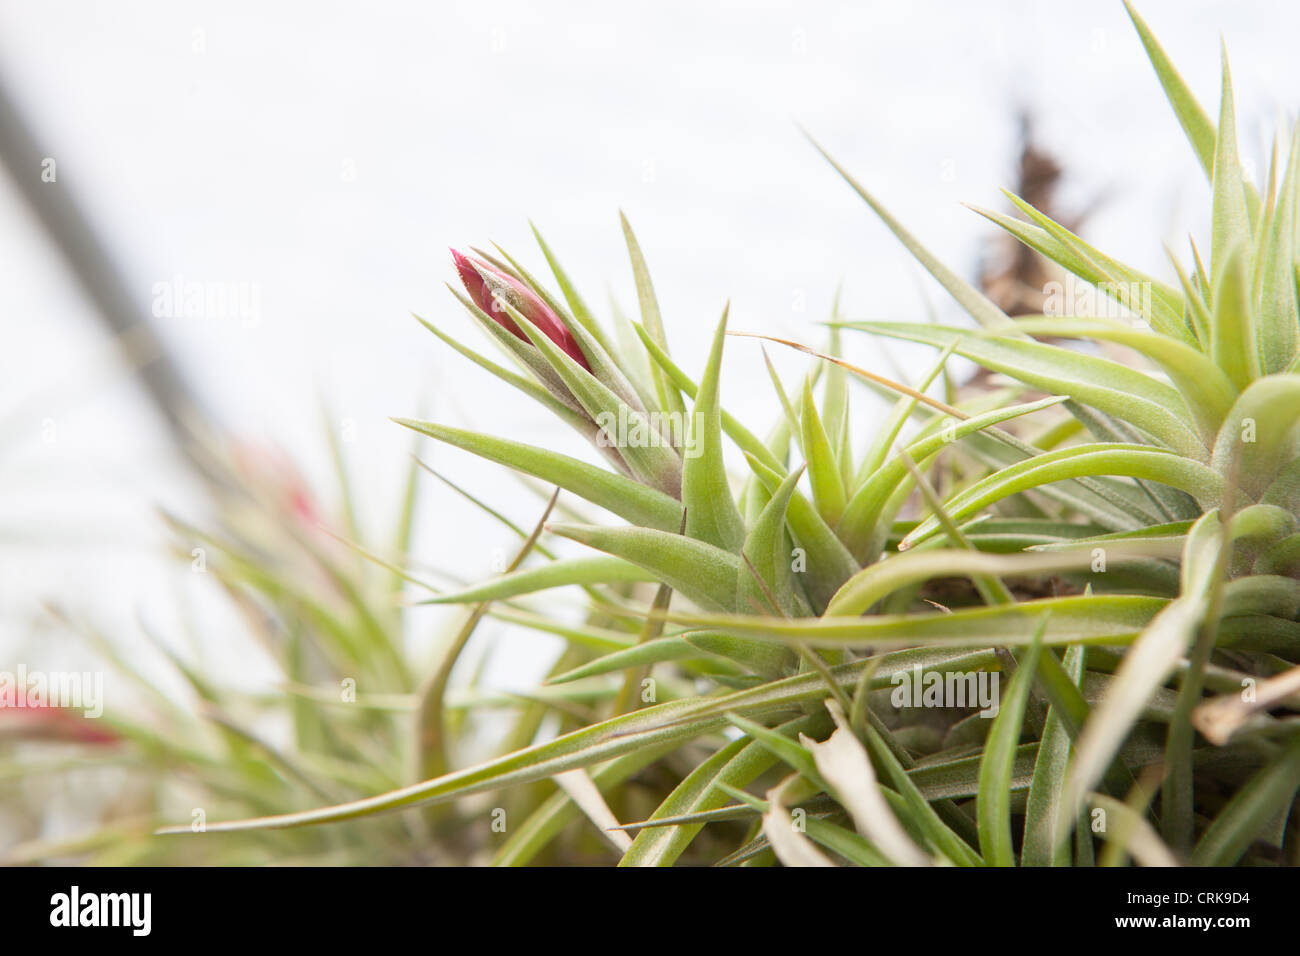 The flowering Tillandsia - Bromeliad Stock Photo